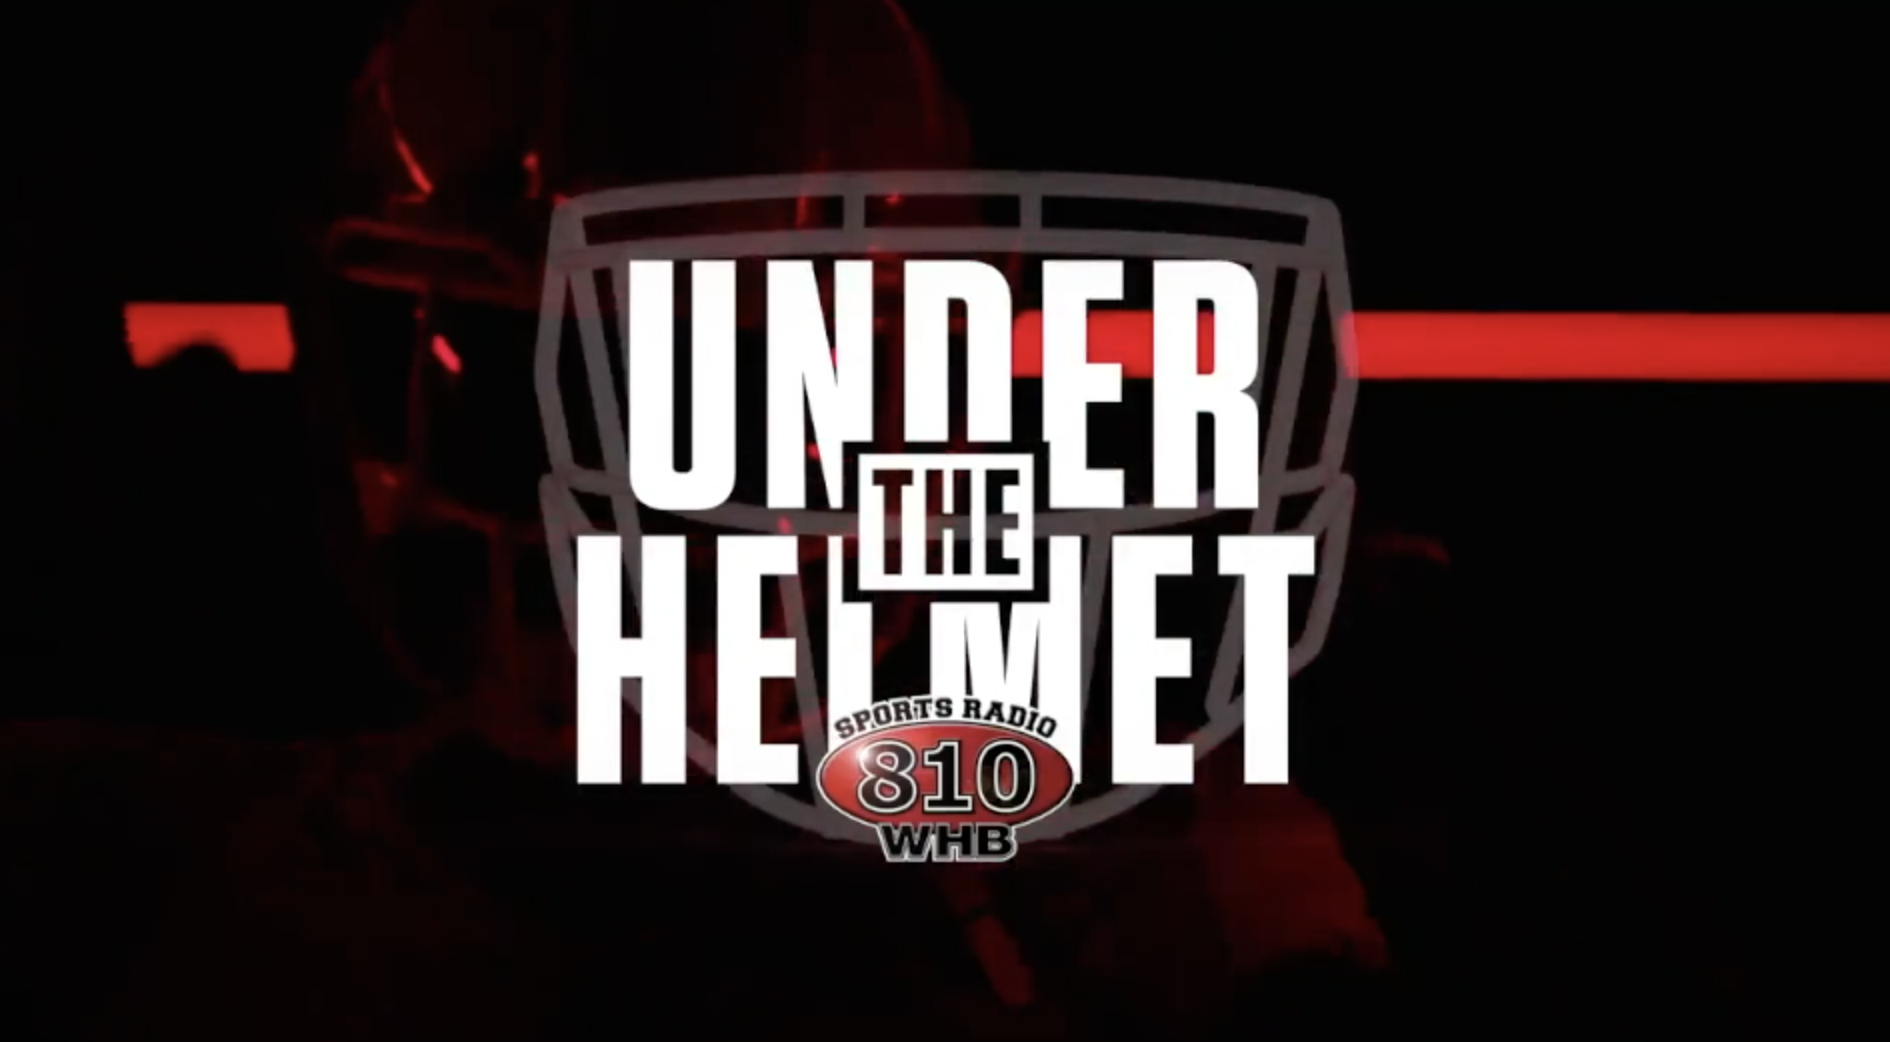 Watch Episode 1 of Under the Helmet with Sports Radio 810